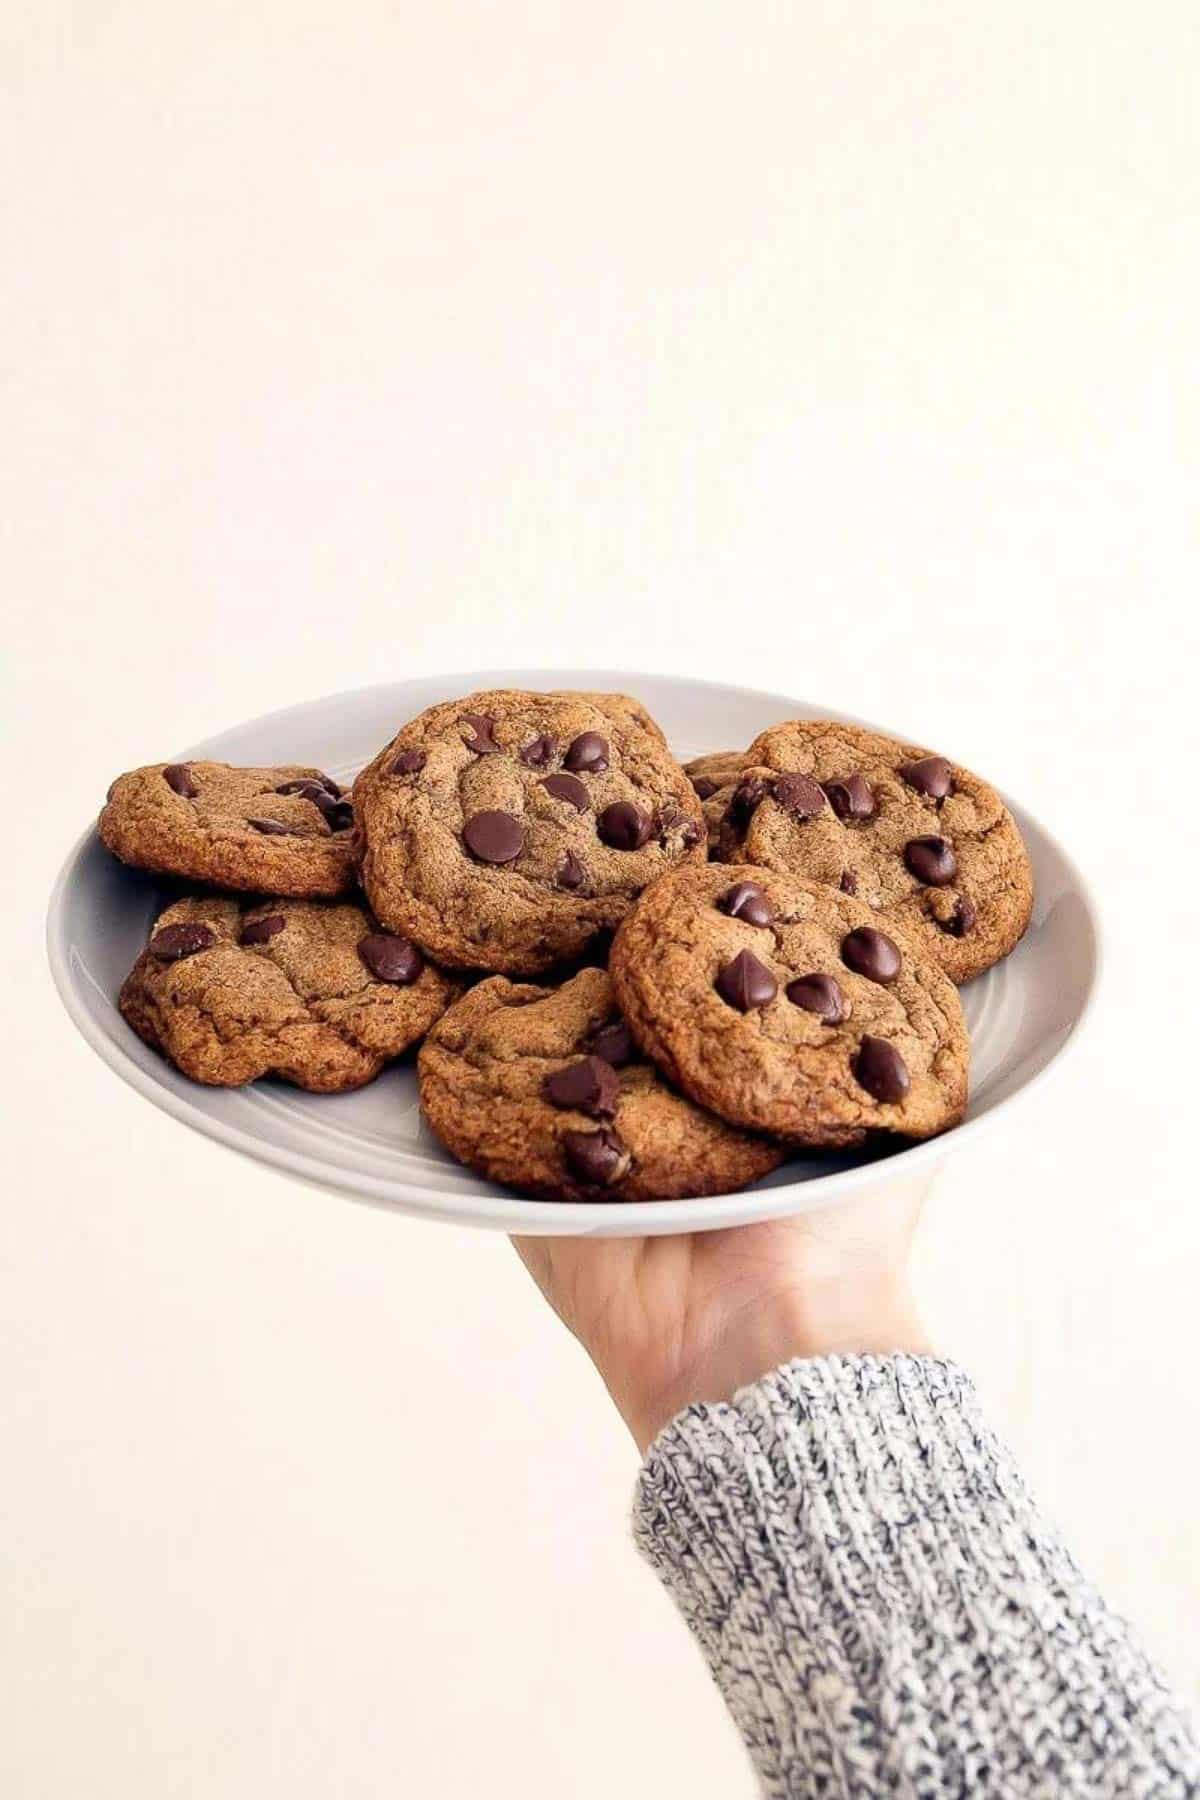 https://www.dessertfortwo.com/wp-content/uploads/2016/09/Coconut-Oil-Chocolate-Chip-Cookies-2-1.jpg